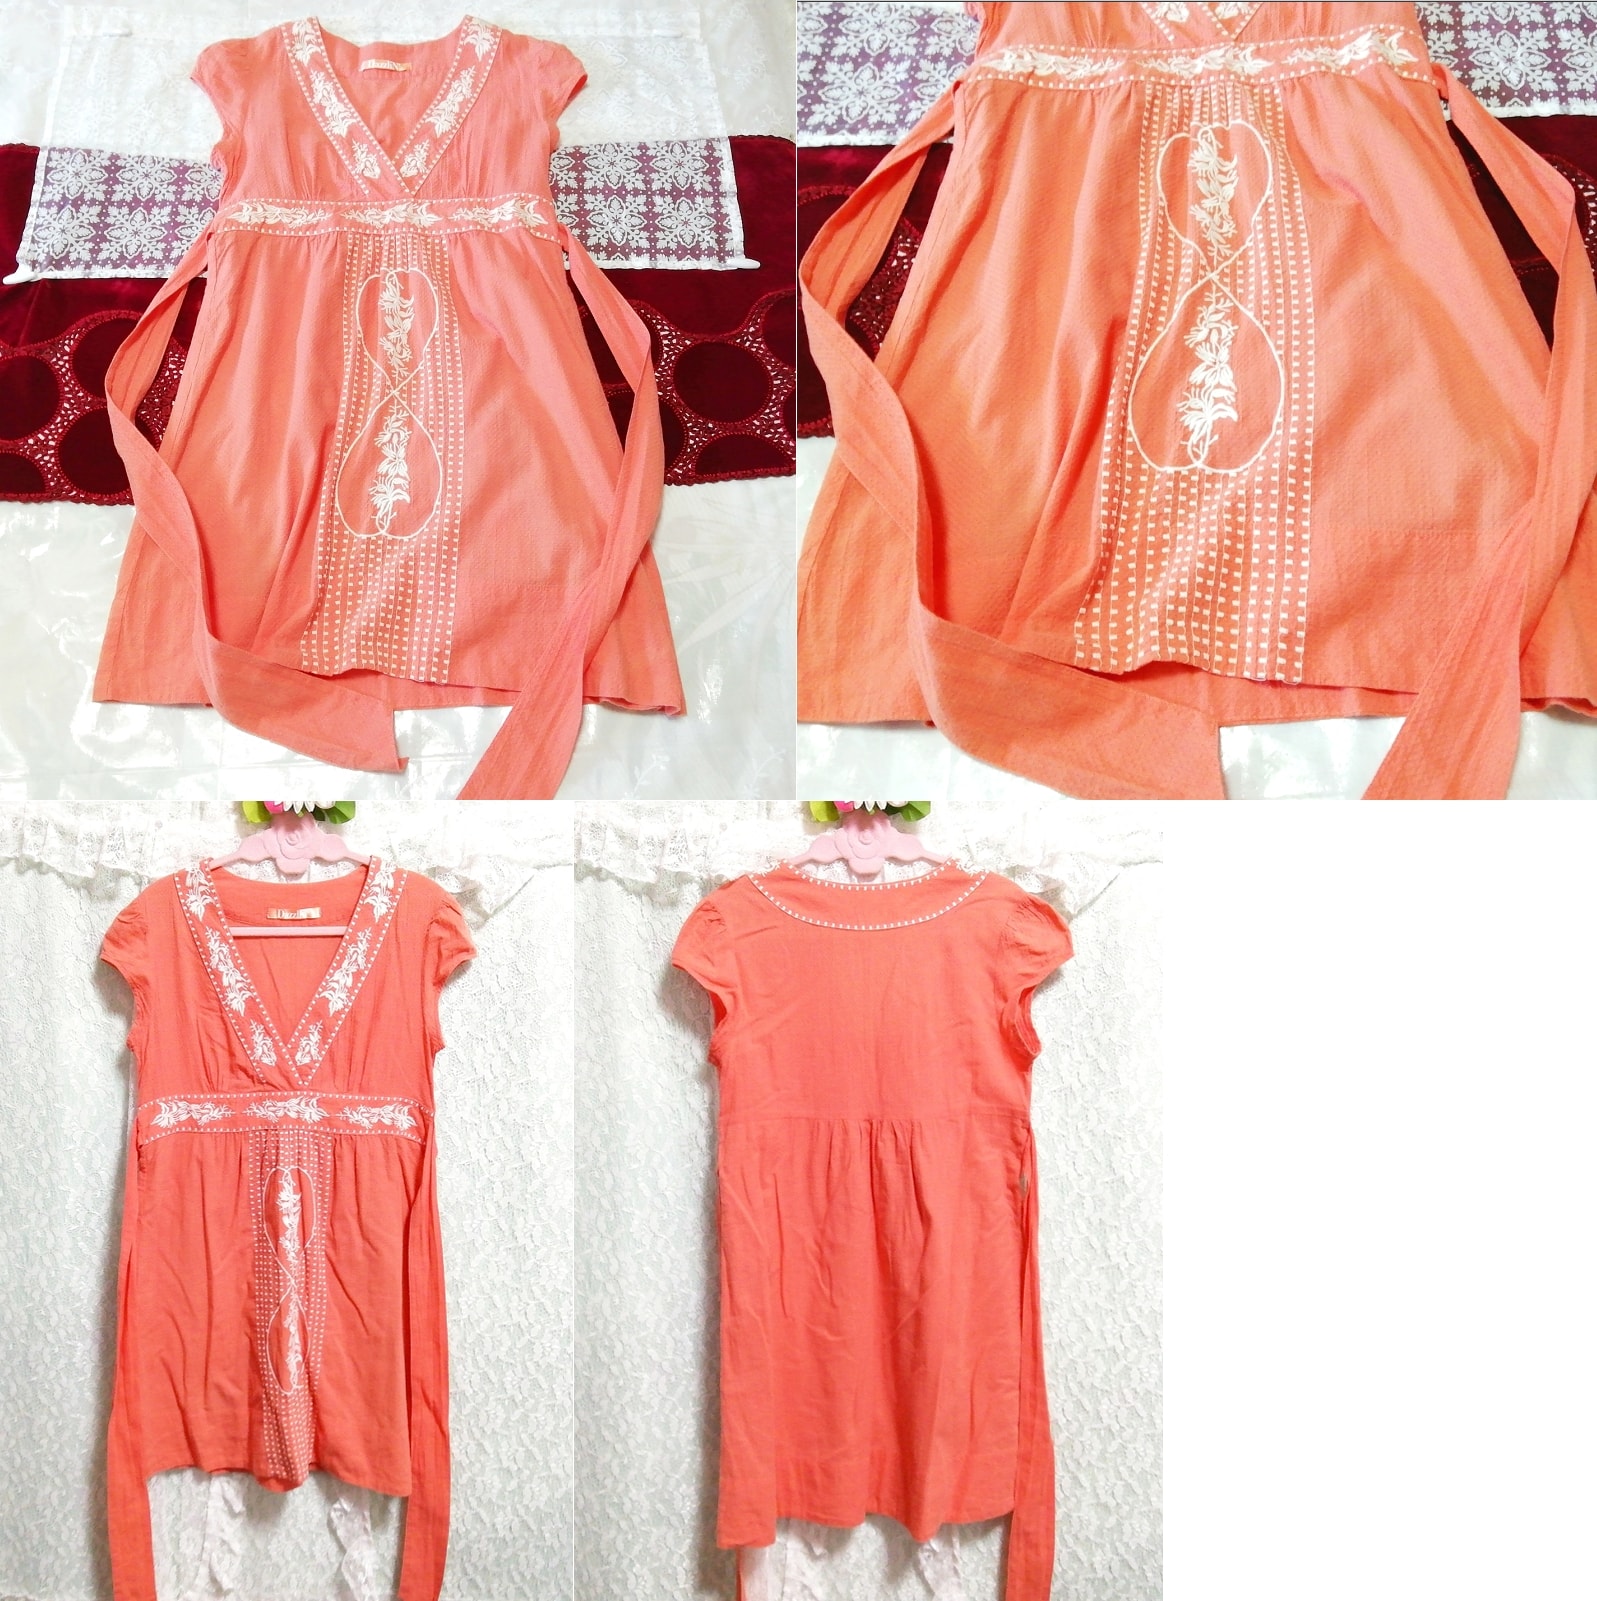 Salmon pink cotton white embroidery sleeveless tunic negligee nightgown dress, tunic, sleeveless, sleeveless, m size